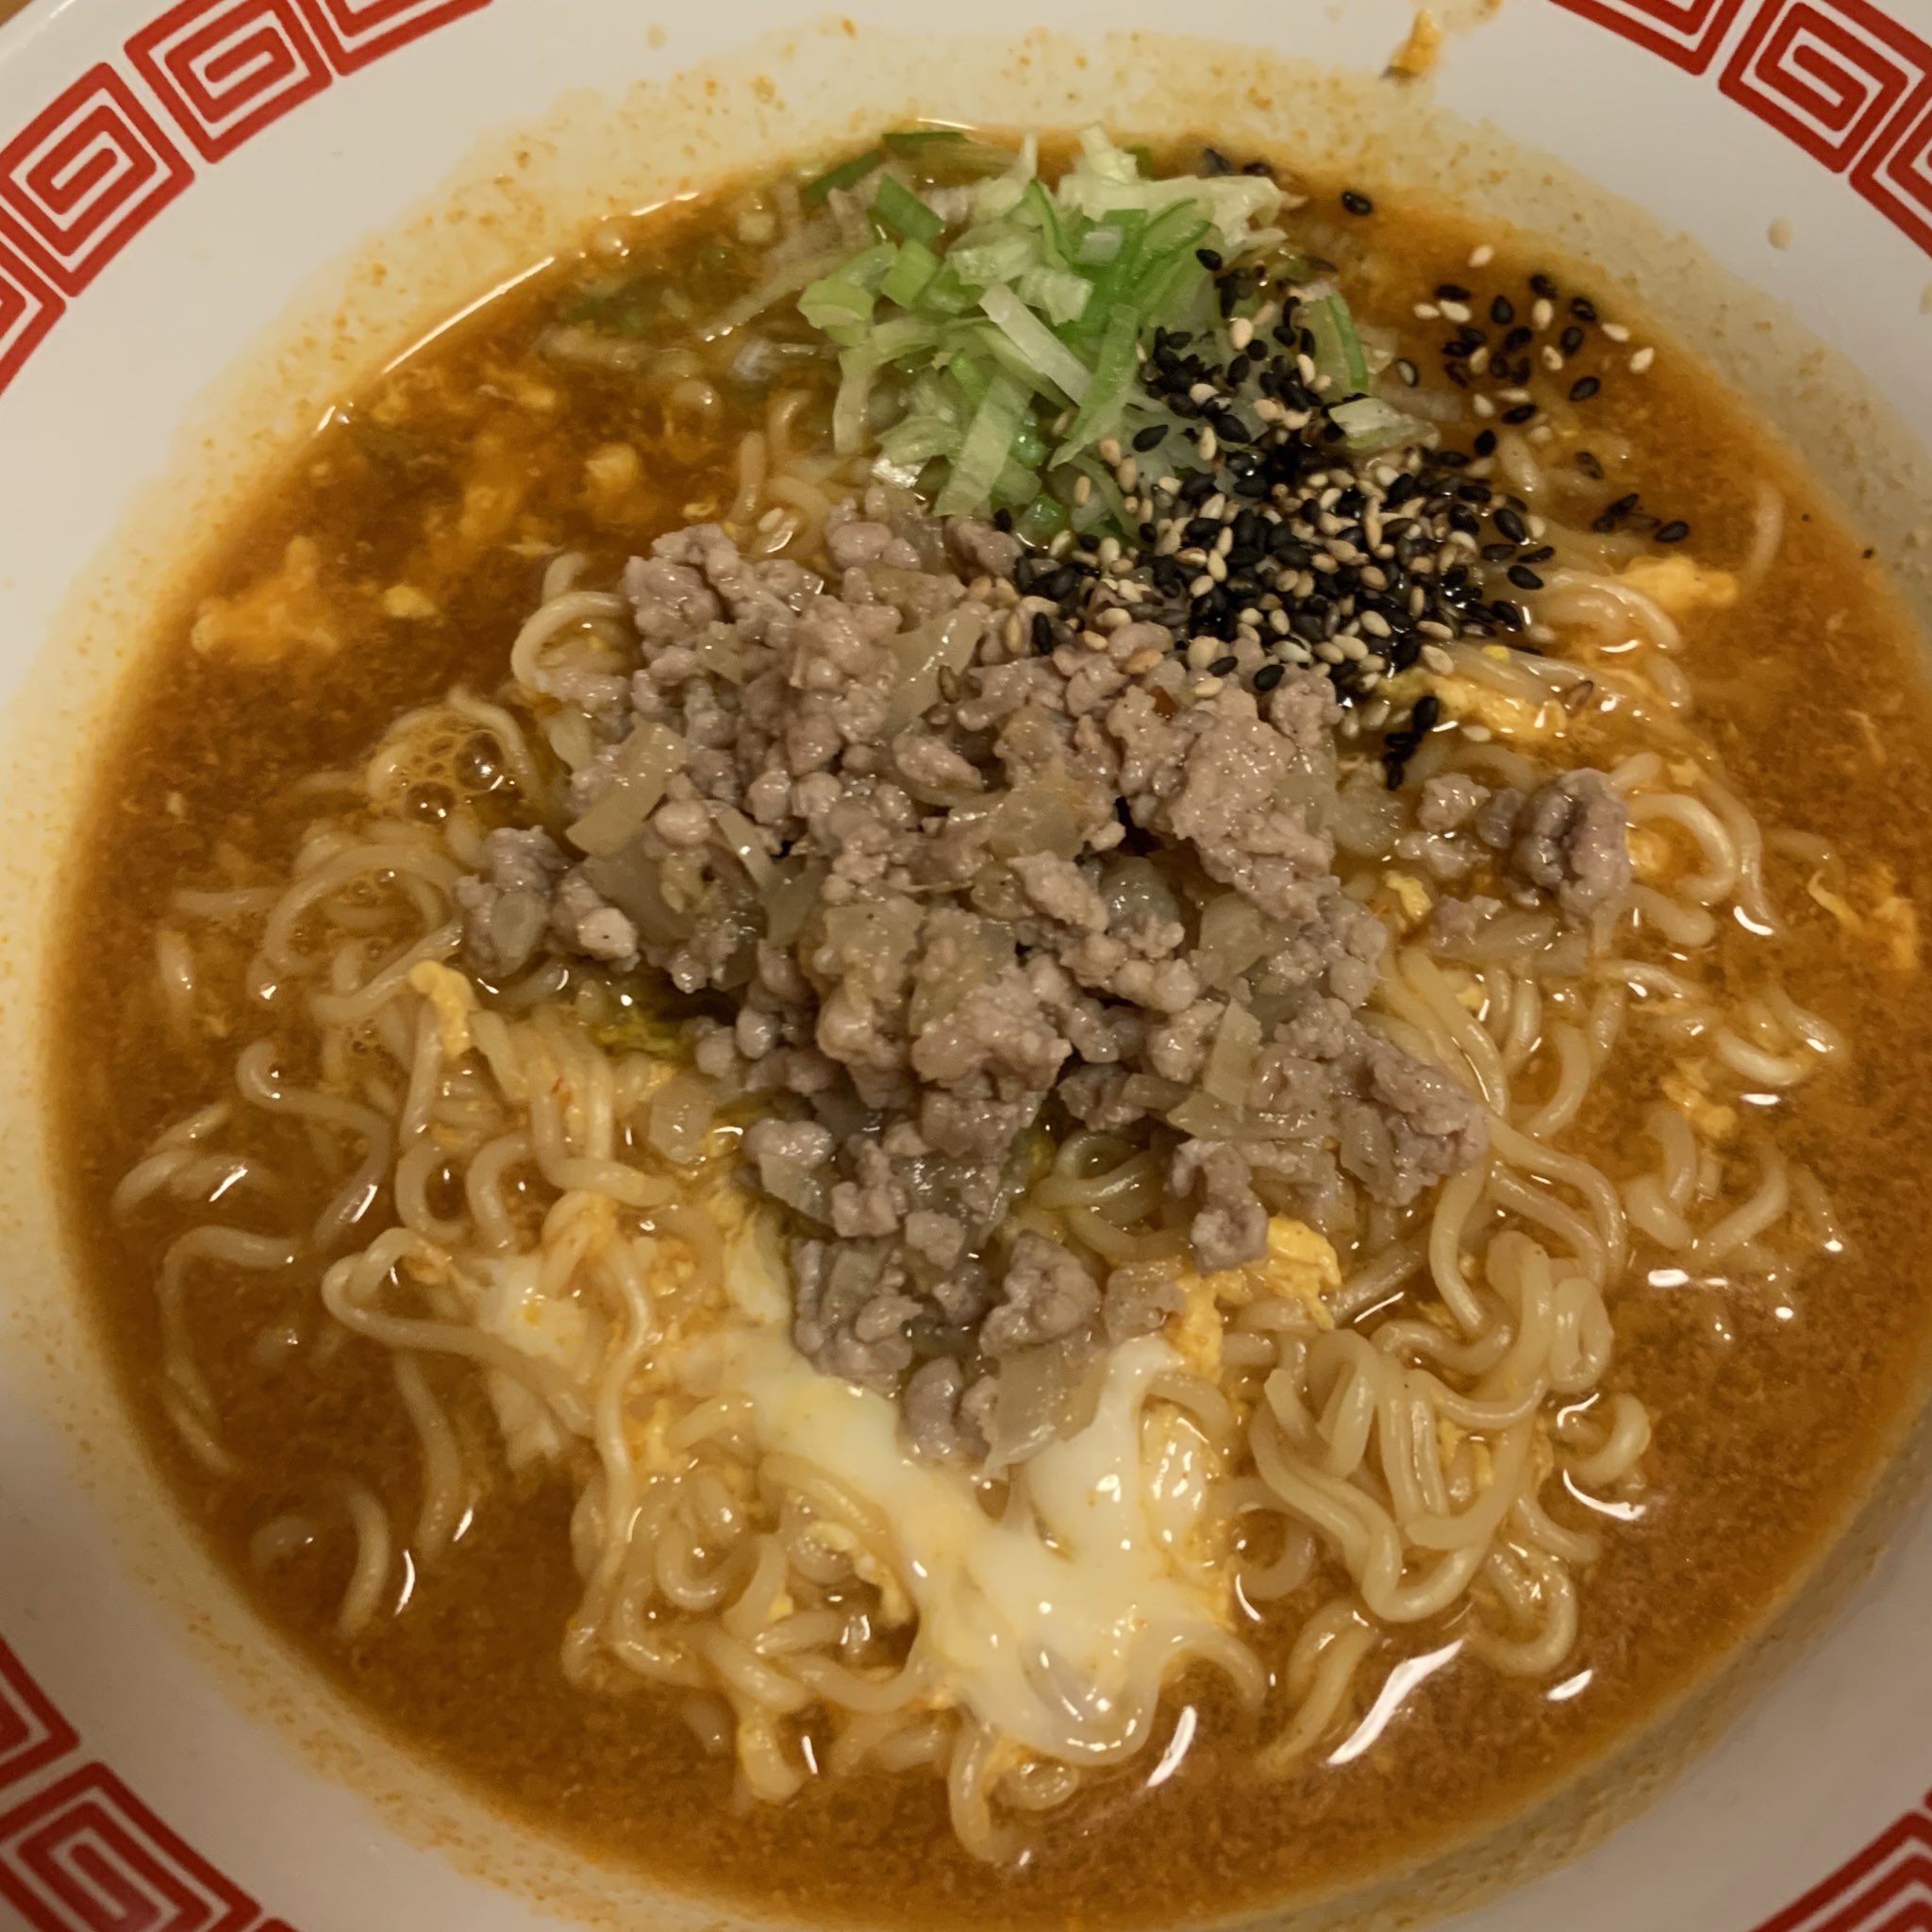 Taihei 今日の晩ご飯はチャルメラ宮崎辛麺の袋麺をちょいアレンジして食べました T Co Wzdaggycxo Twitter